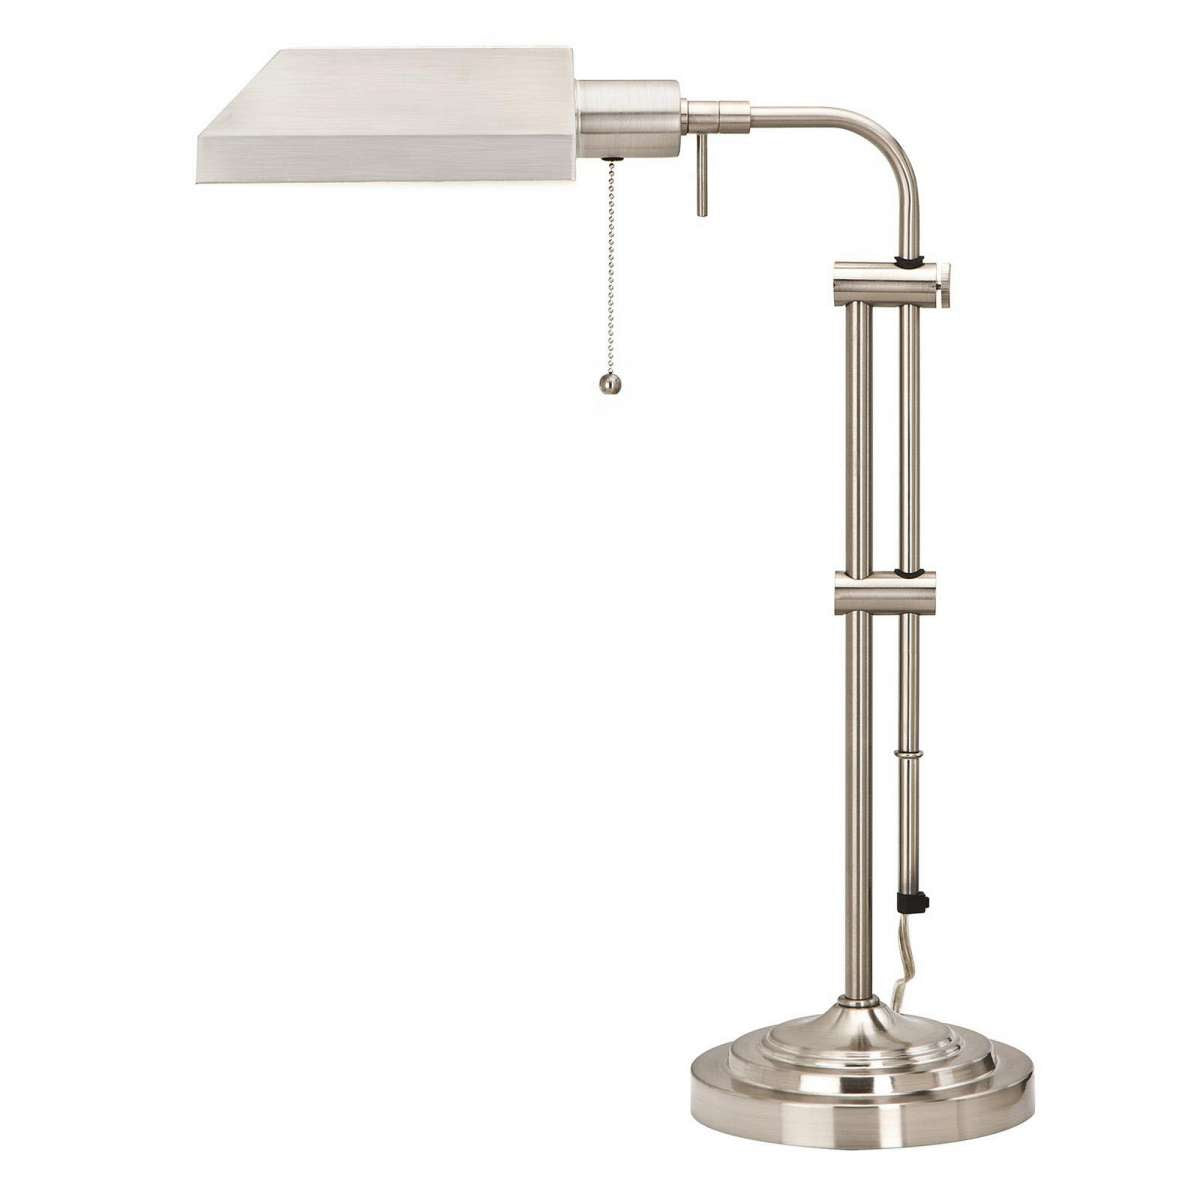 Metal Rectangular Desk Lamp With Adjustable Pole, Silver By Benzara